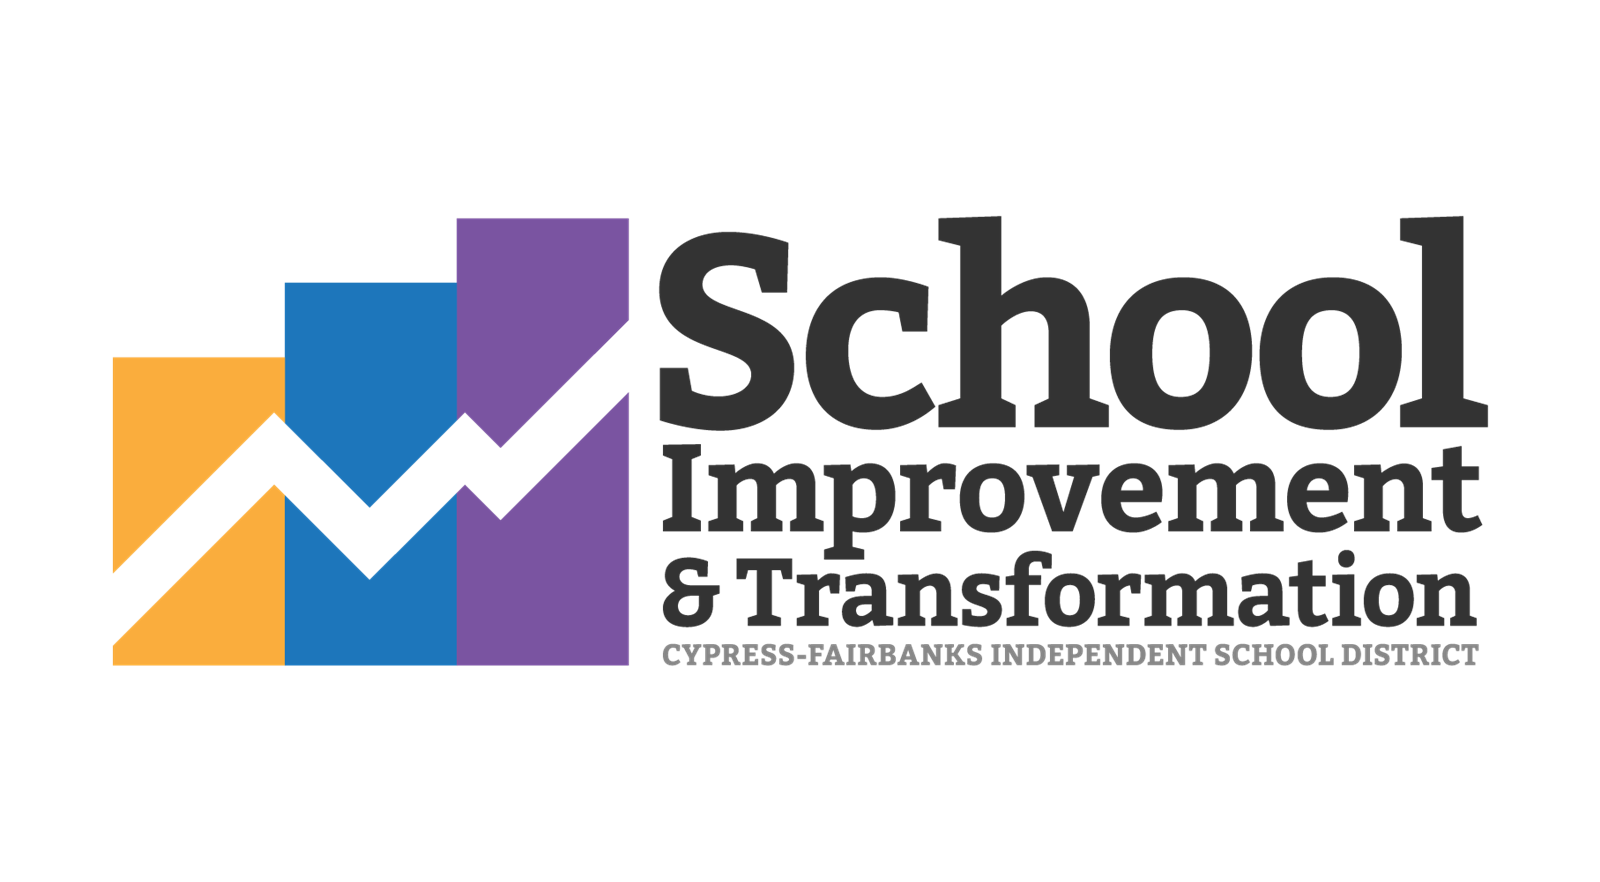 School Improvement & Transformation CFISD